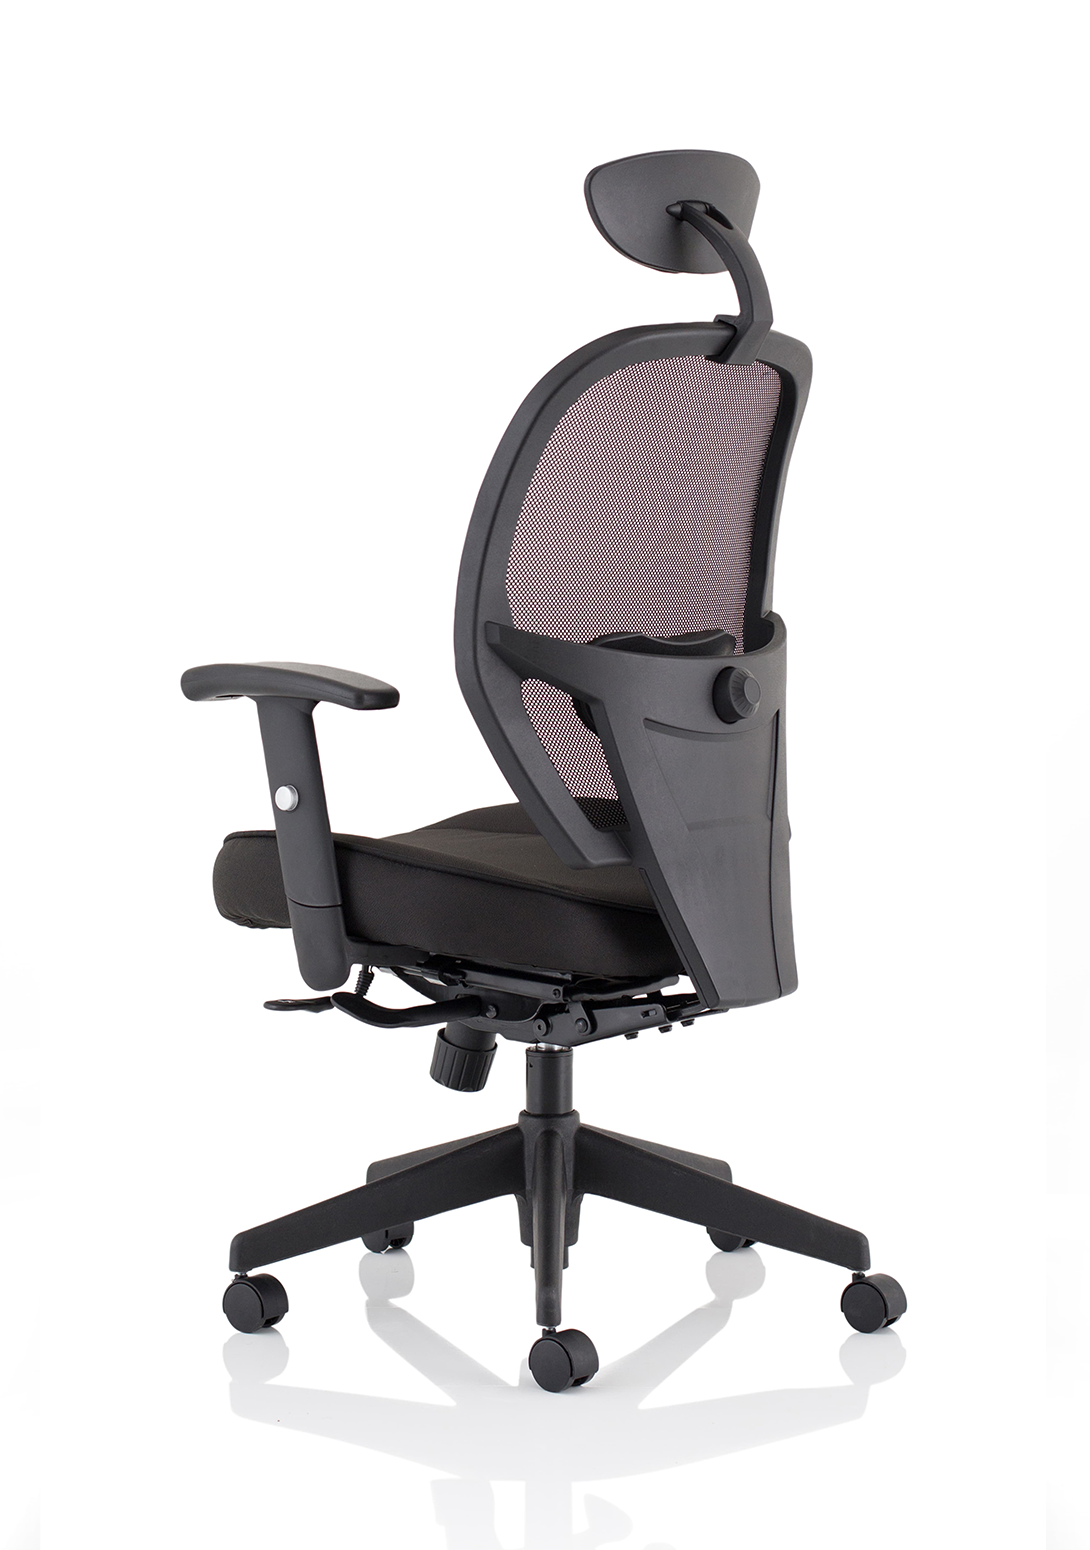 Denver Home Office Chair | Ergonomic Office Chair | Home Office Chair | Home Office Furniture | Home Furnishings | Ergonomic Chair